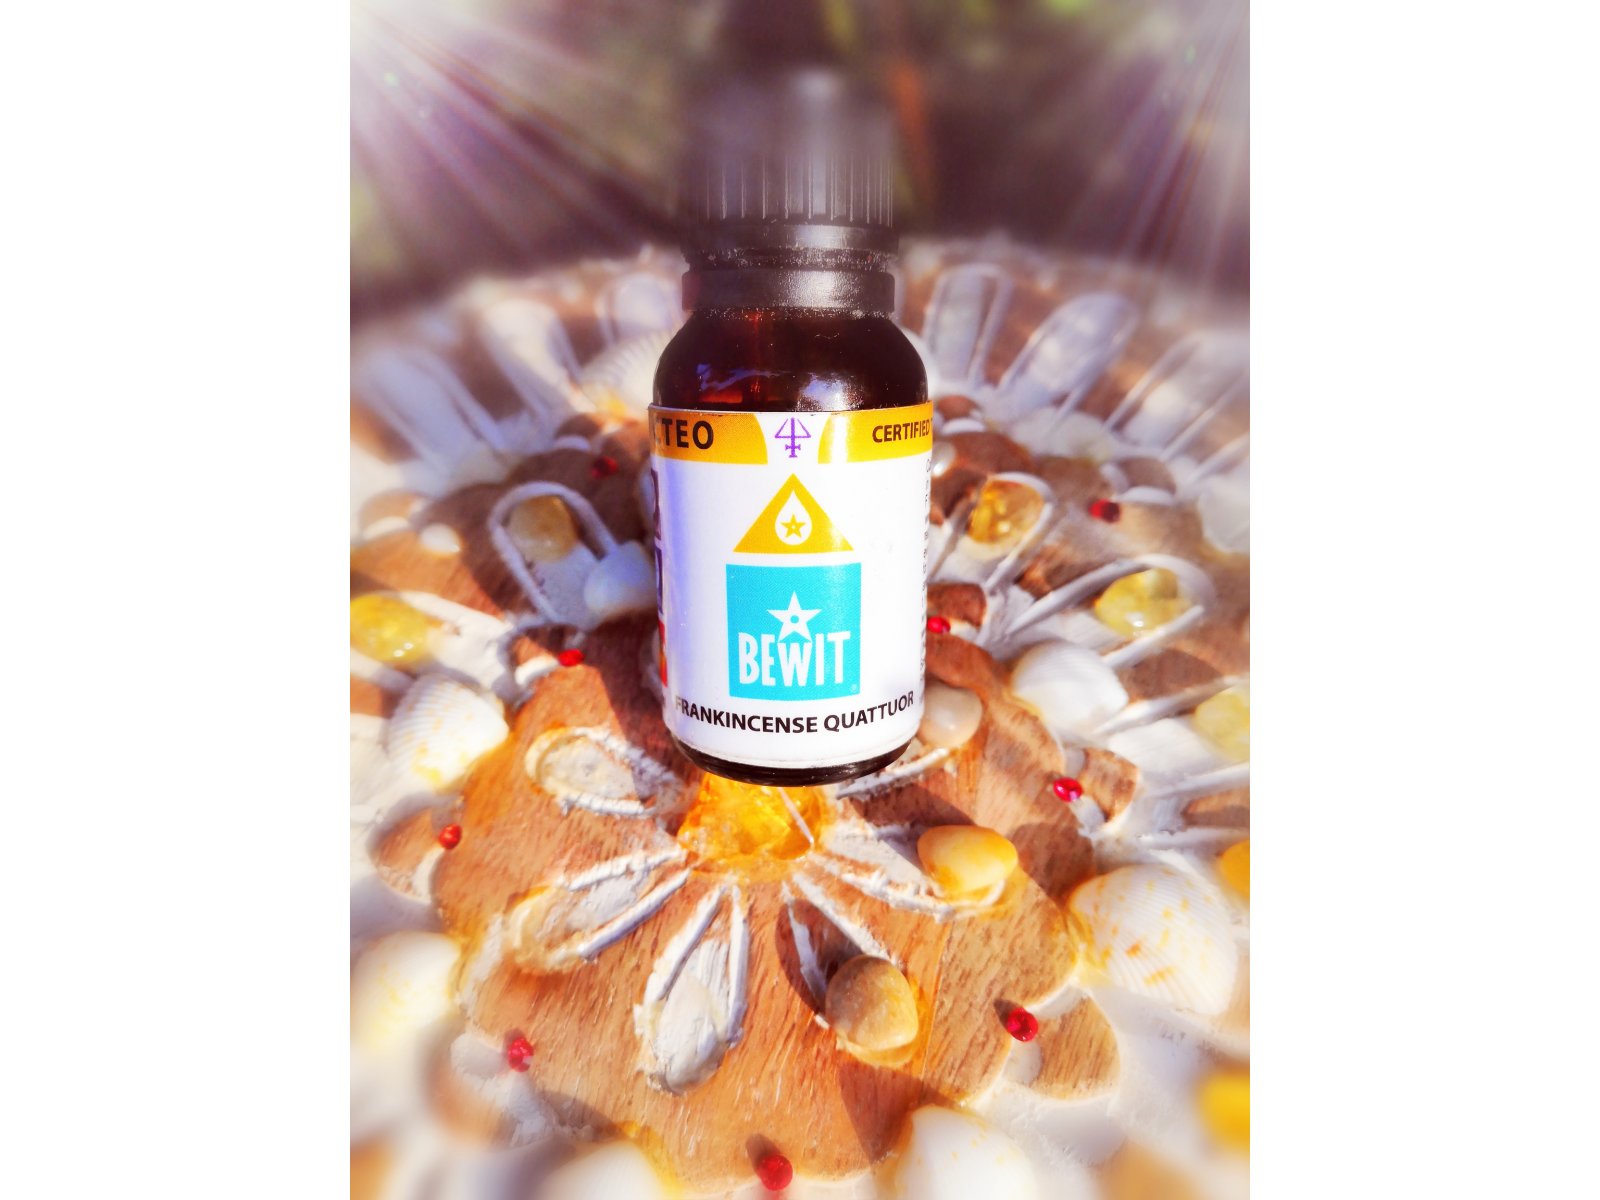 BEWIT Frankincense Quattuor - A unique blend of the essential oils - 3